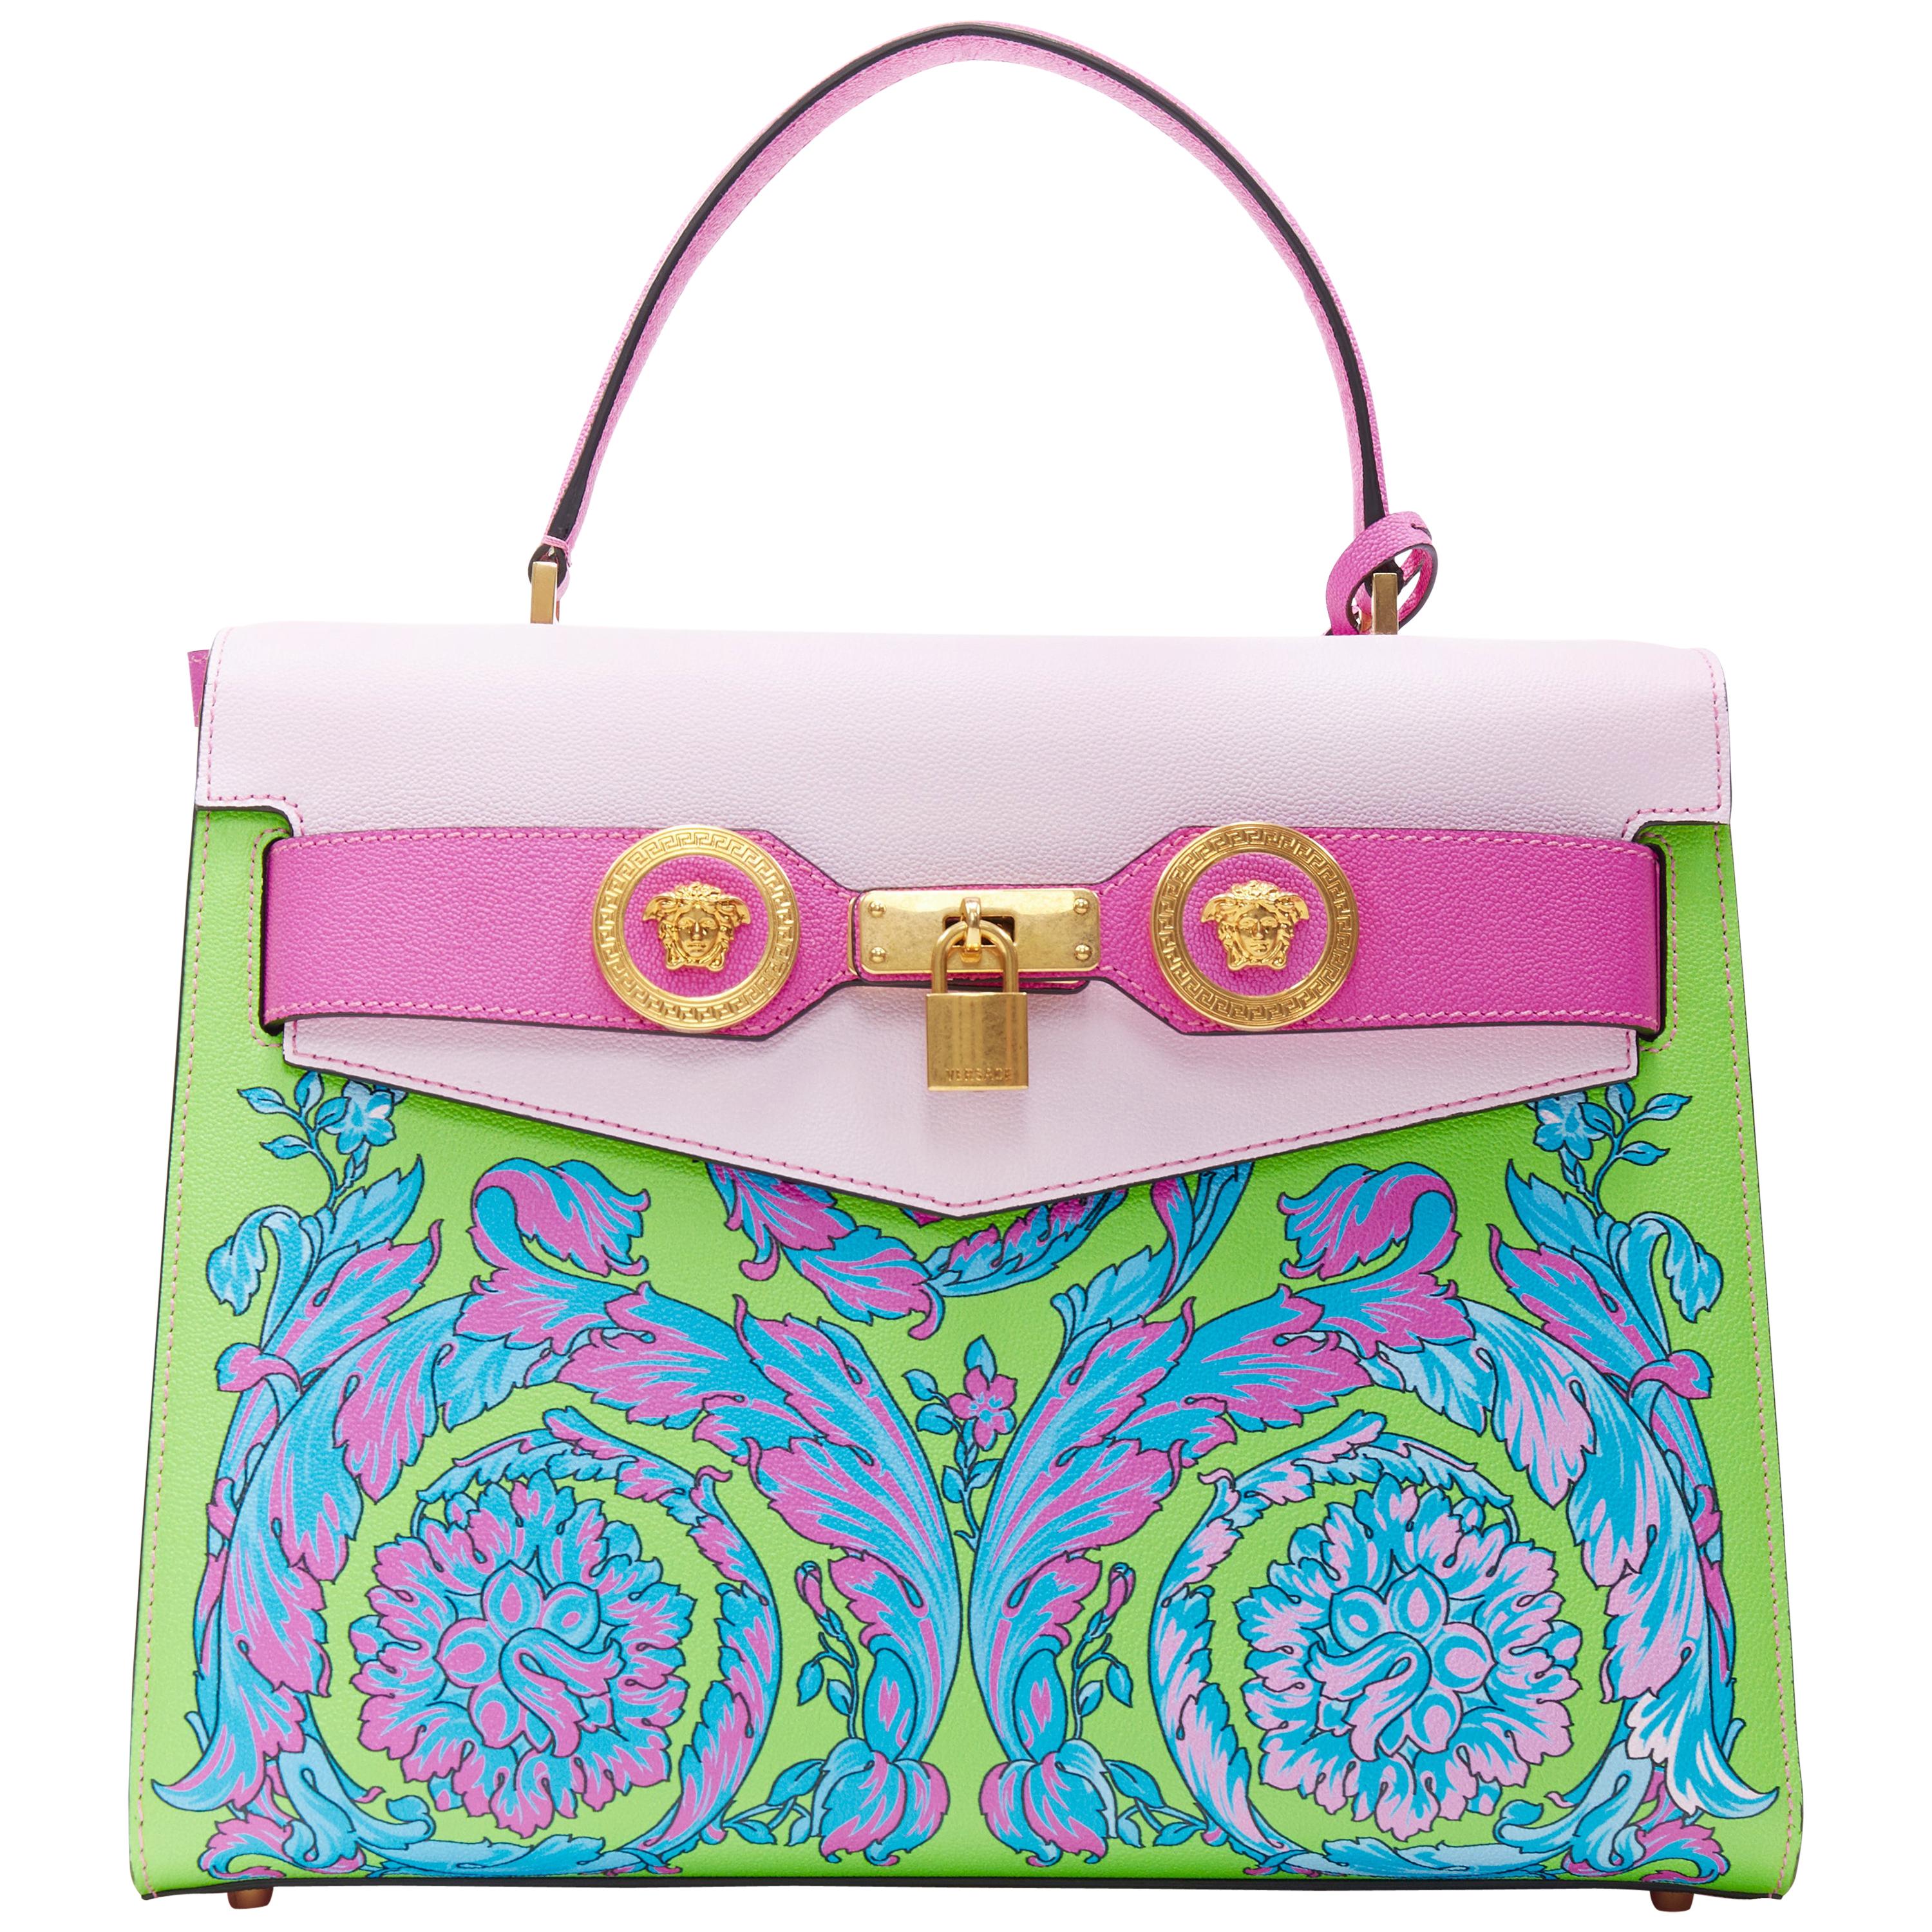 new VERSACE Tribute Diana Technicolor Baroque print top handle Kelly satchel bag